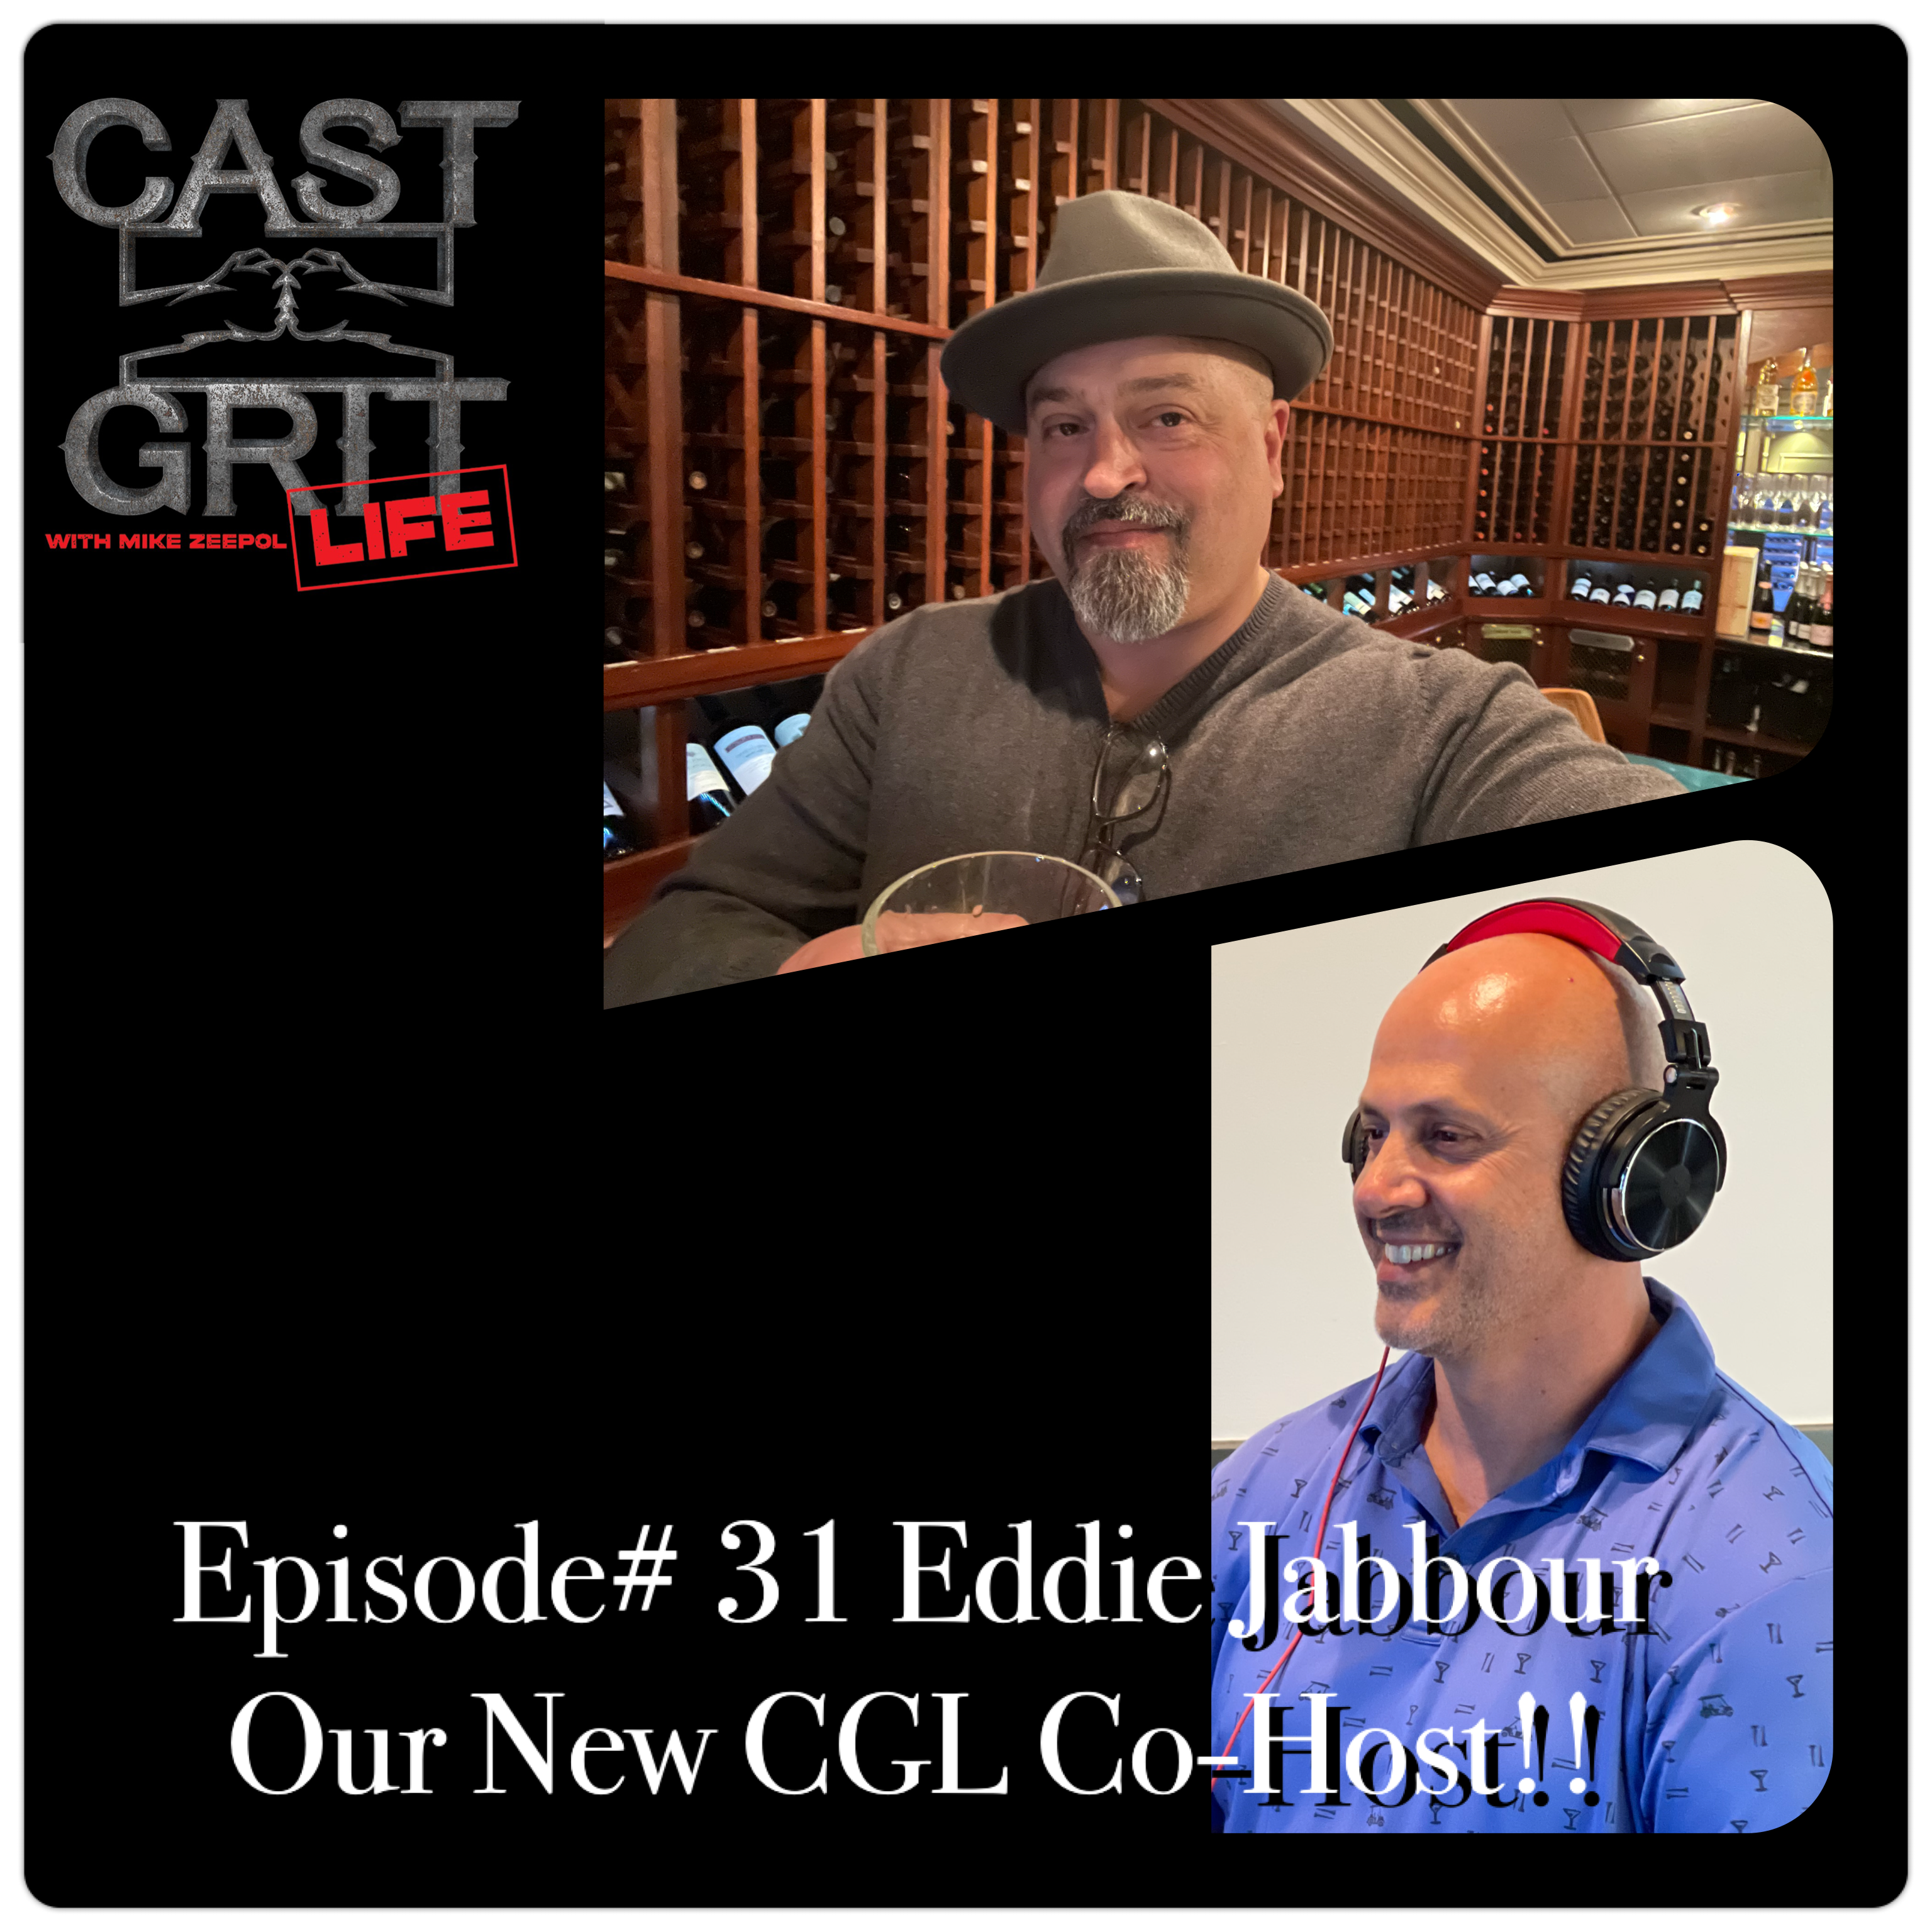 Episode# 31 Eddy Jabbour - New Co-Host!!